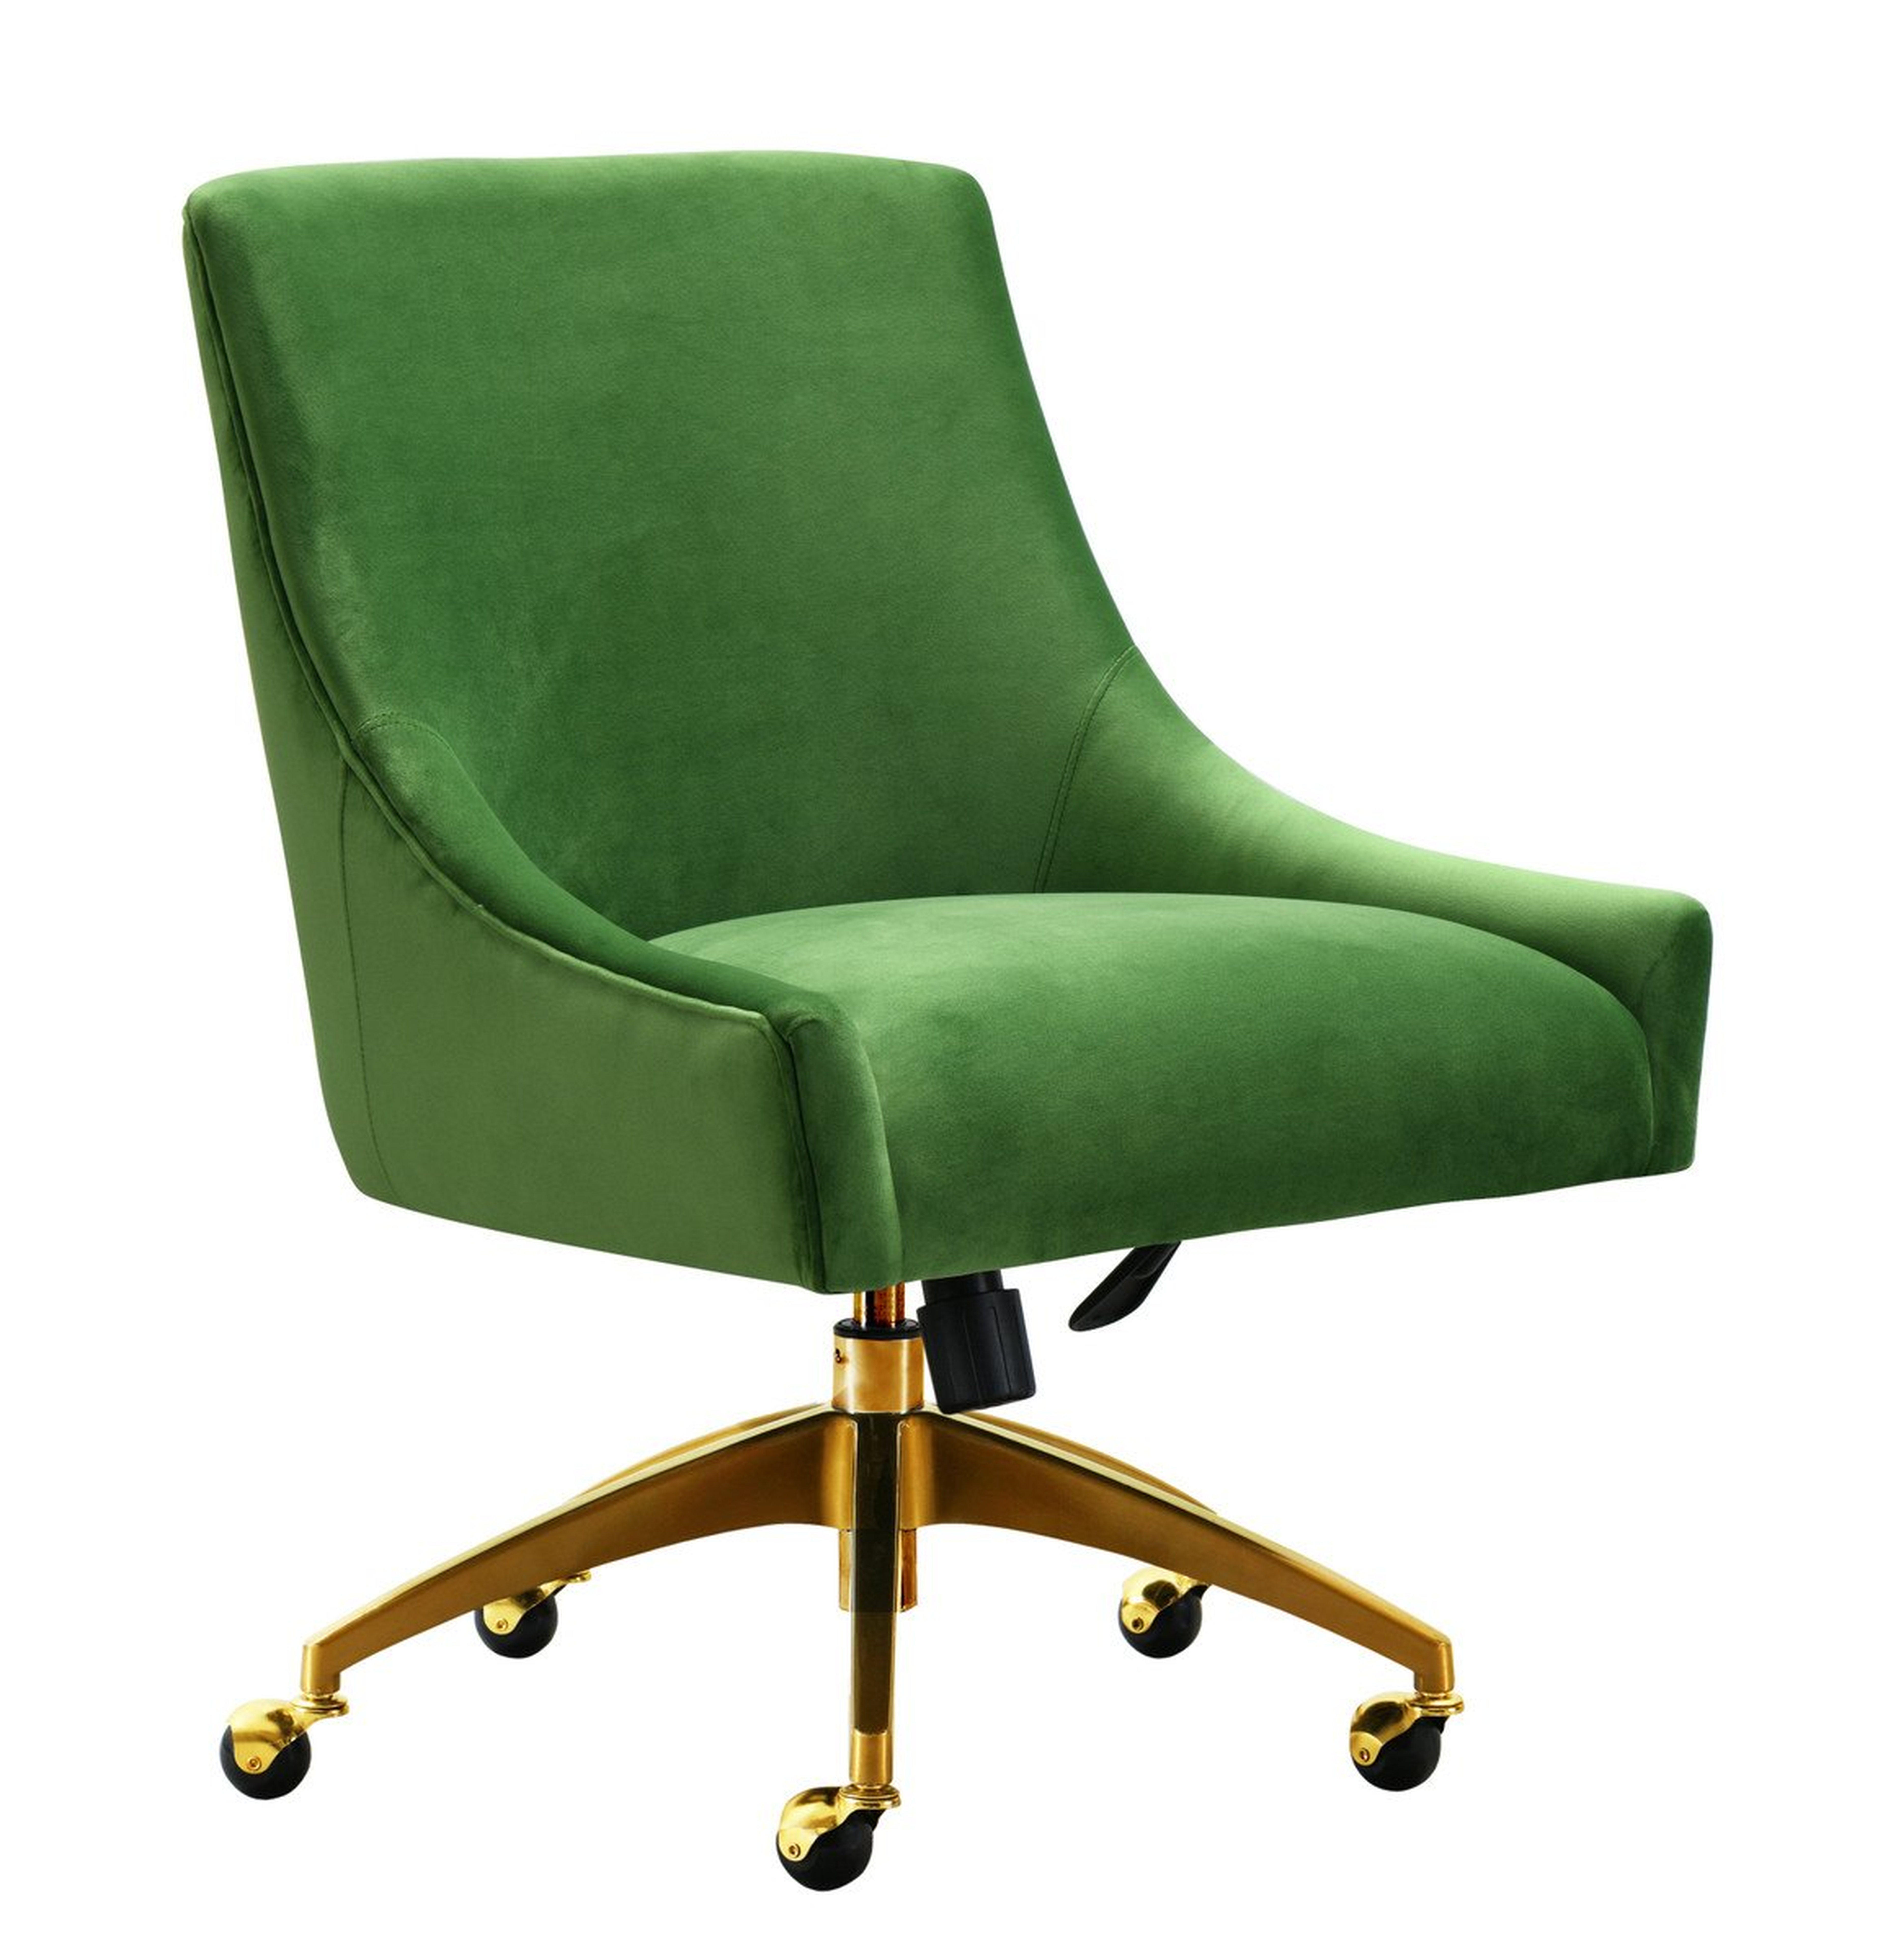 Skyler Green Office Swivel Chair - Maren Home